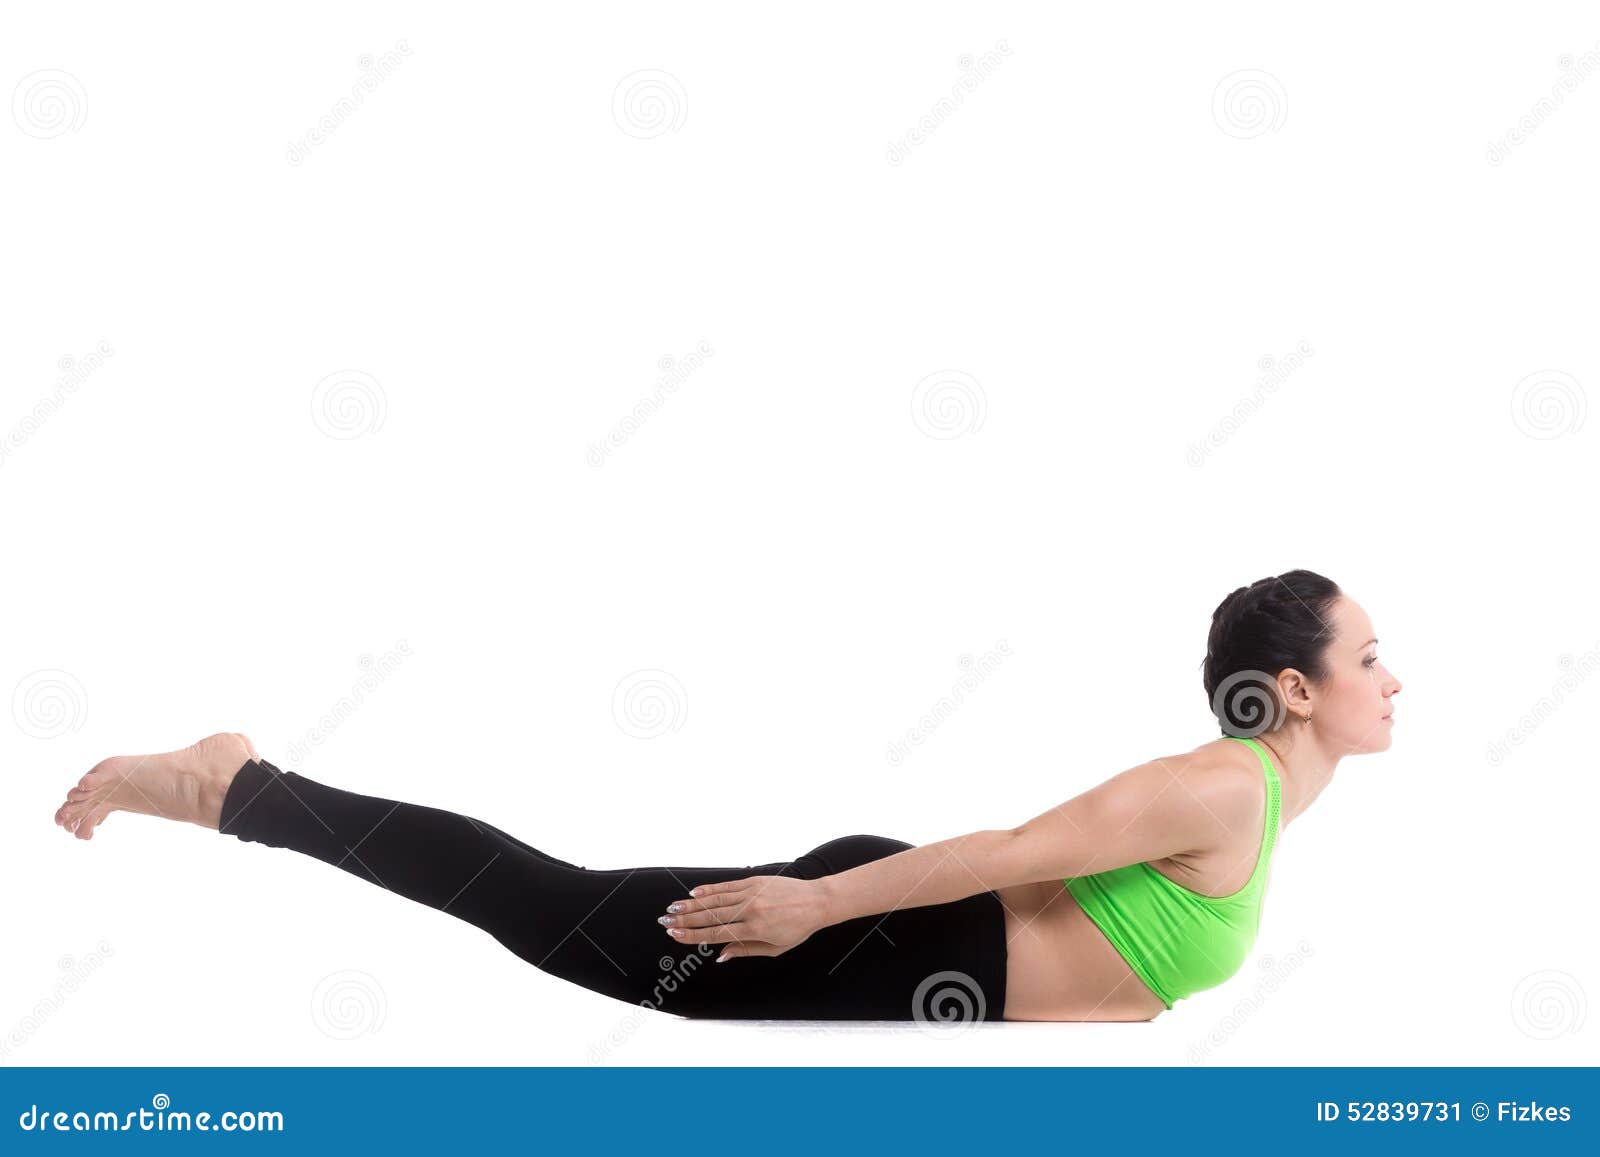 Locust Yoga Pose Stock Photo - Image: 52839731